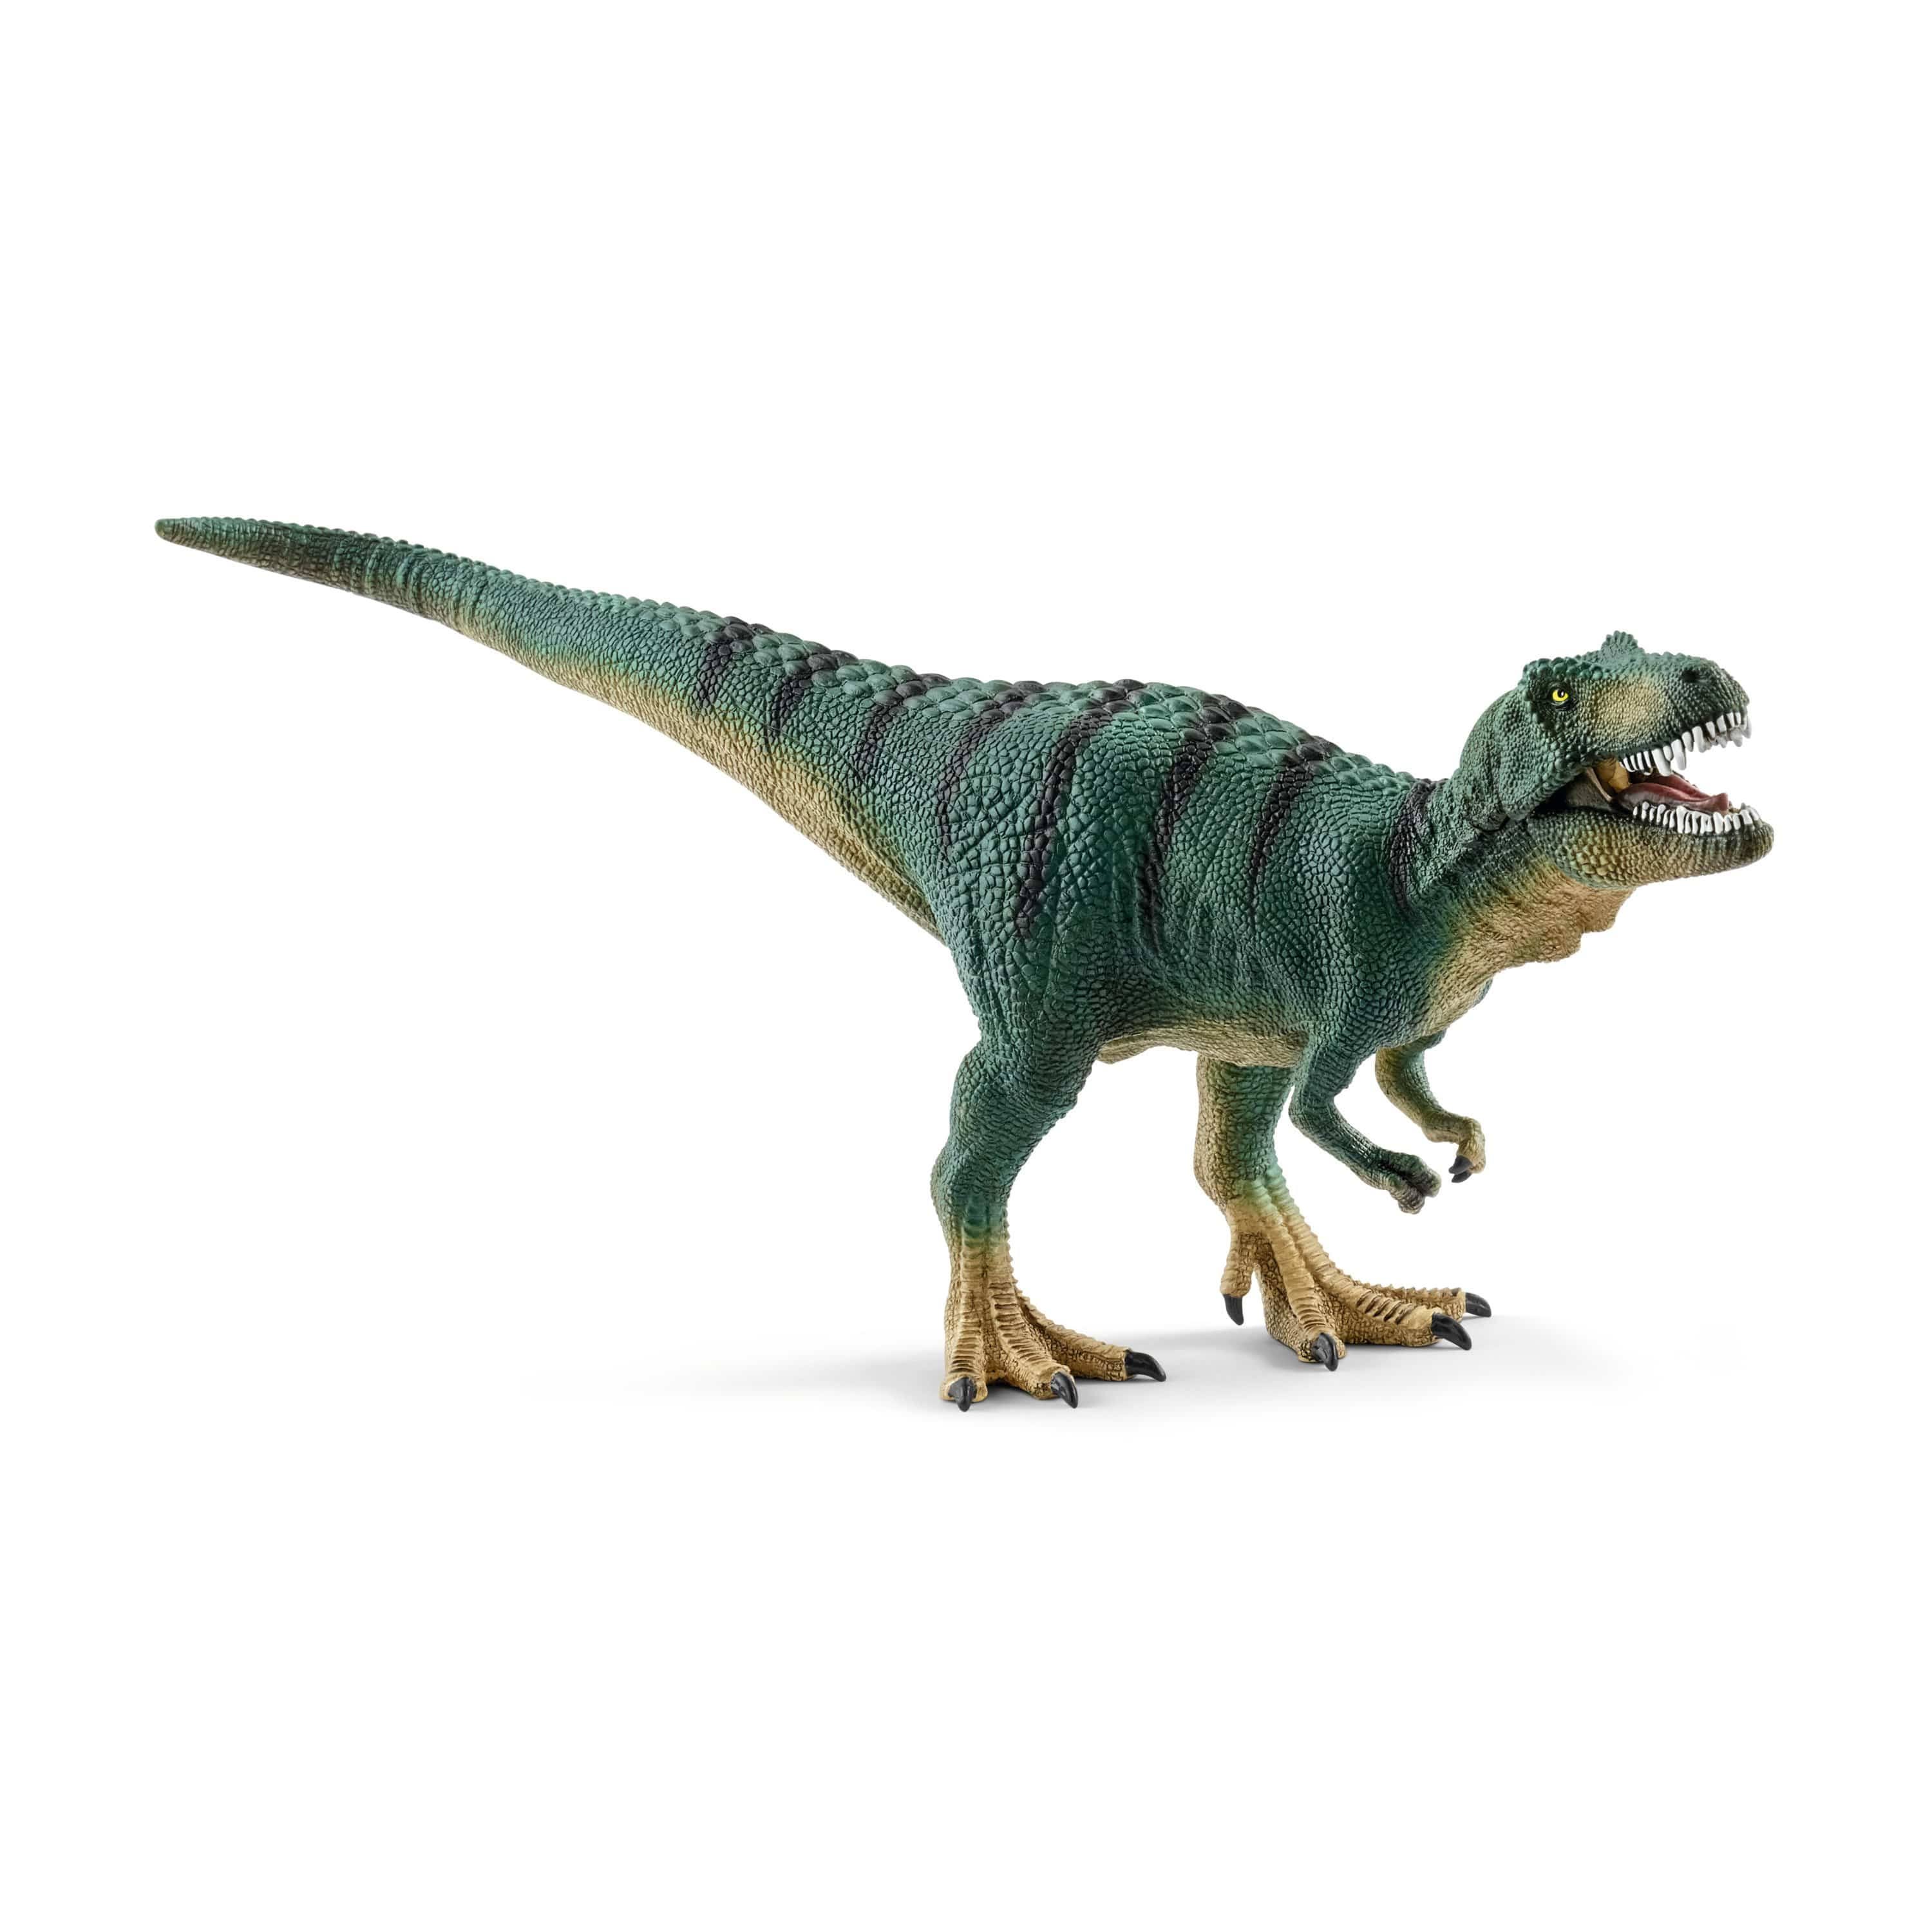 Schleich Dinosaurs Collectable Figure - Tyrannosaurus Rex, 23cm x 10cm x 6cm